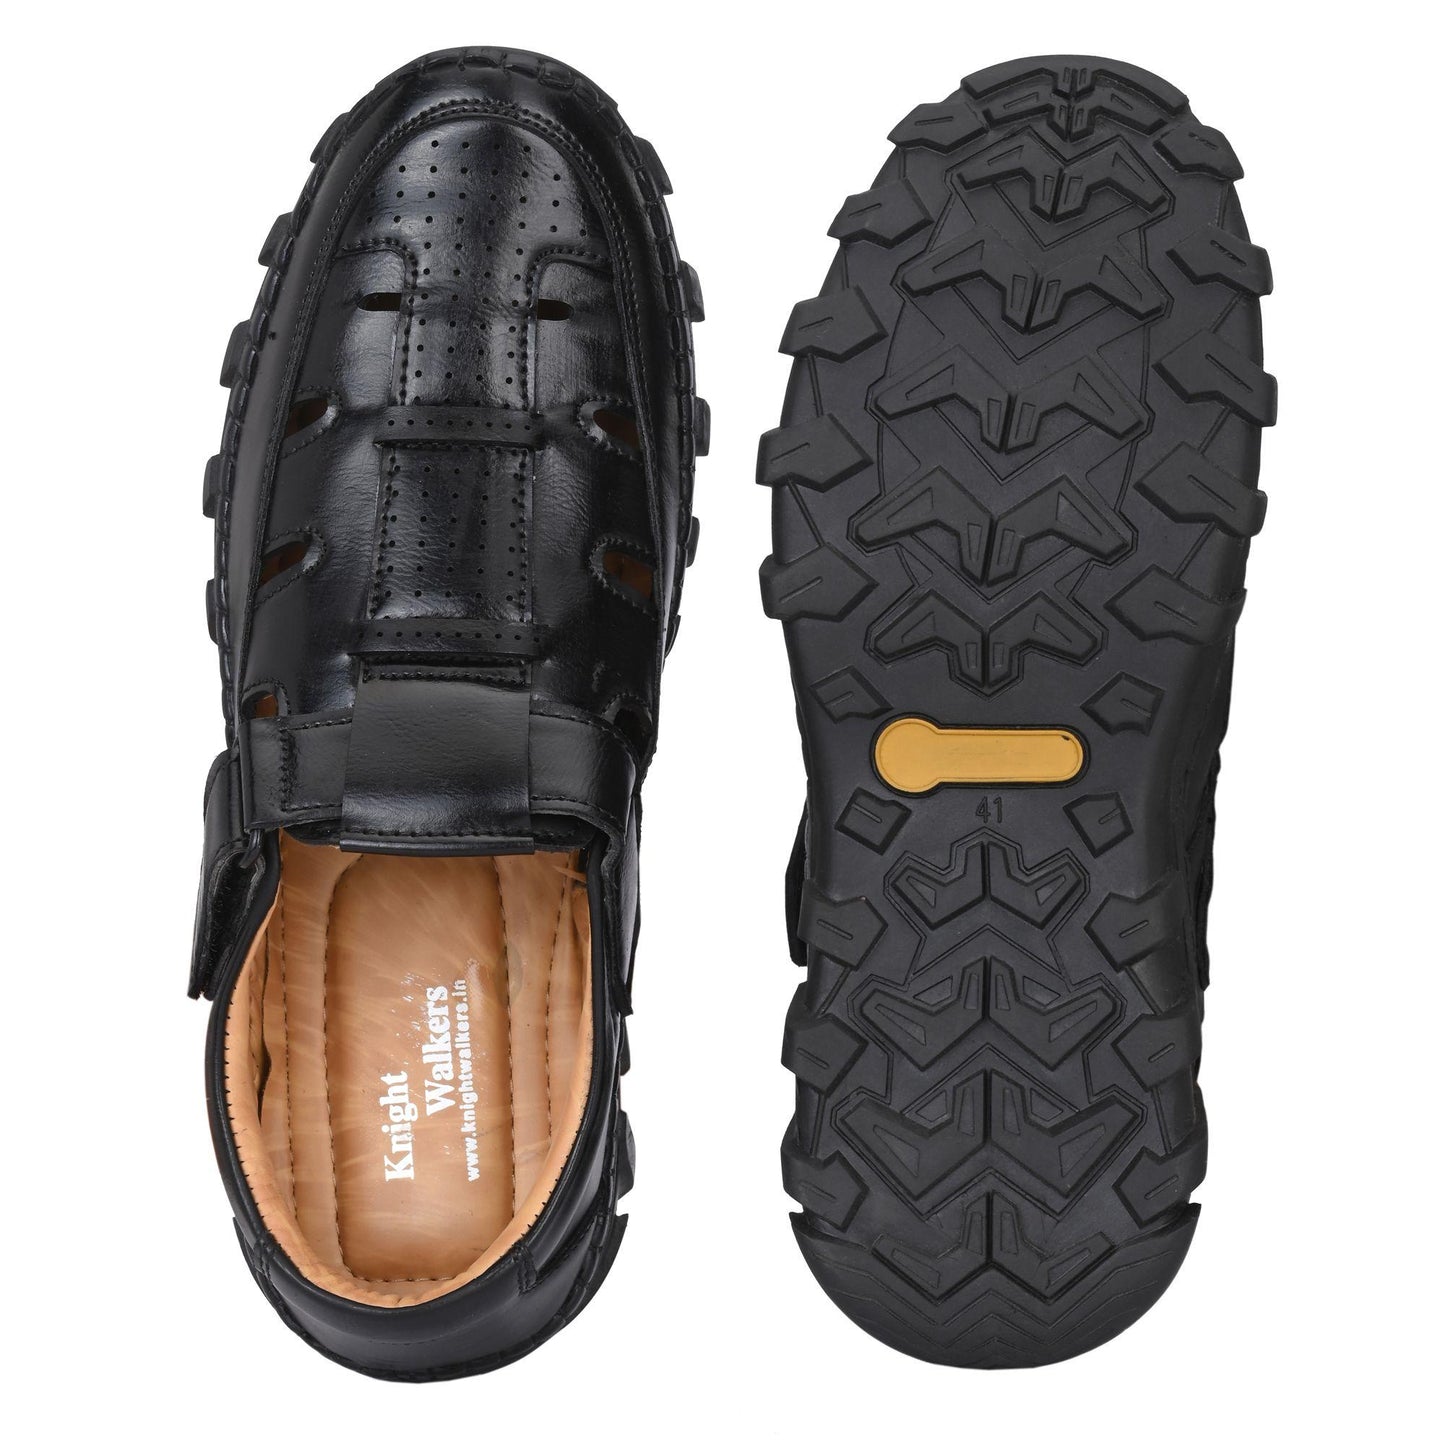 Black Roman Sandals For Men - Blossom Mantra